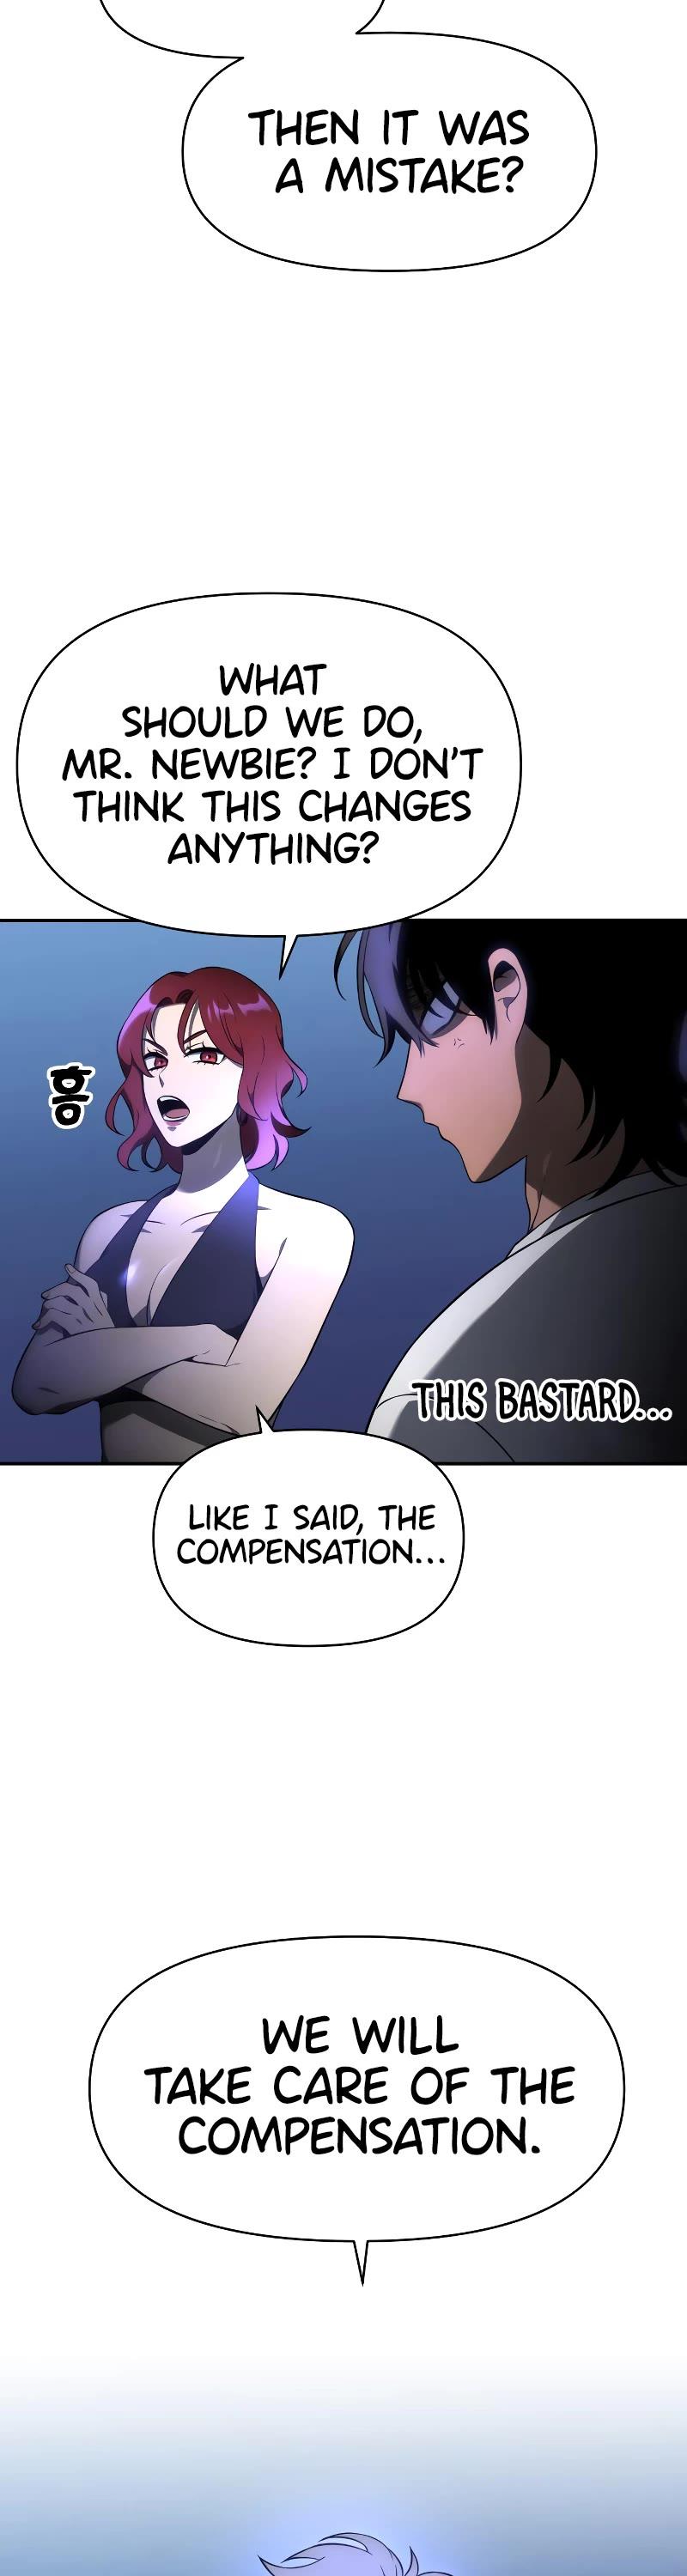 I Used To Be A Boss Chapter 7 page 51 - Mangakakalot